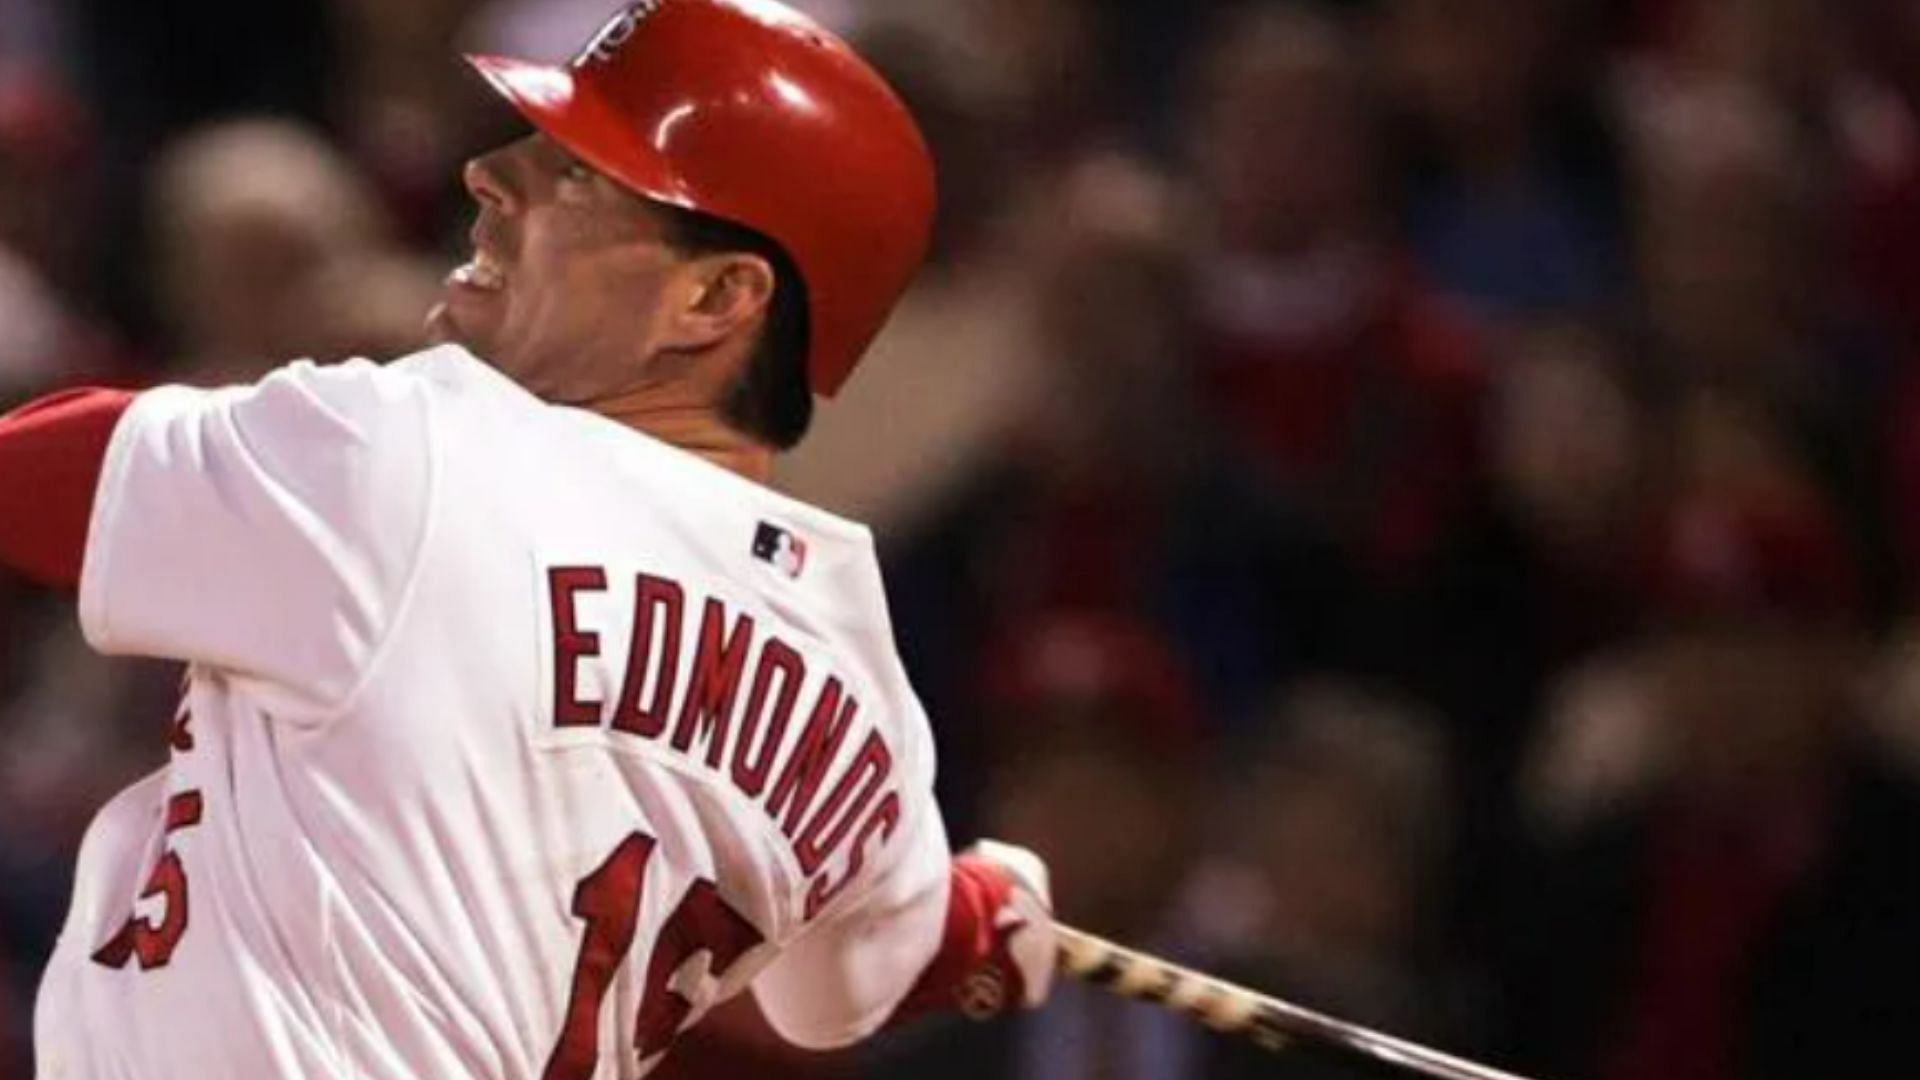 Former MLB player Jim Edmonds